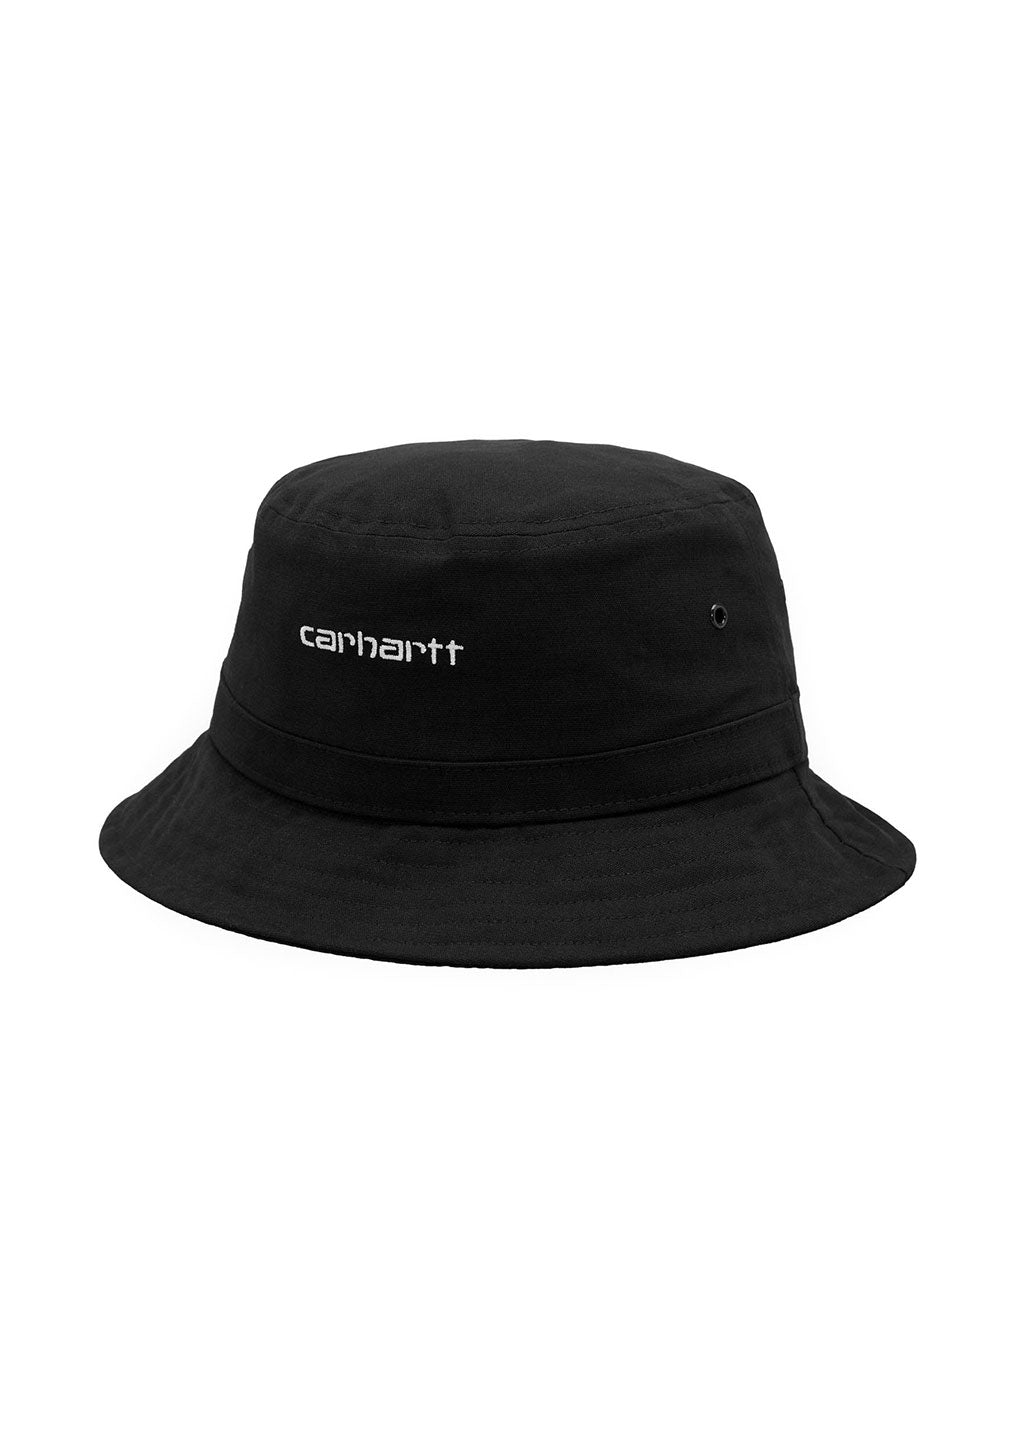 Carhartt WIP Script Bucket Hat - Black / White - M-L